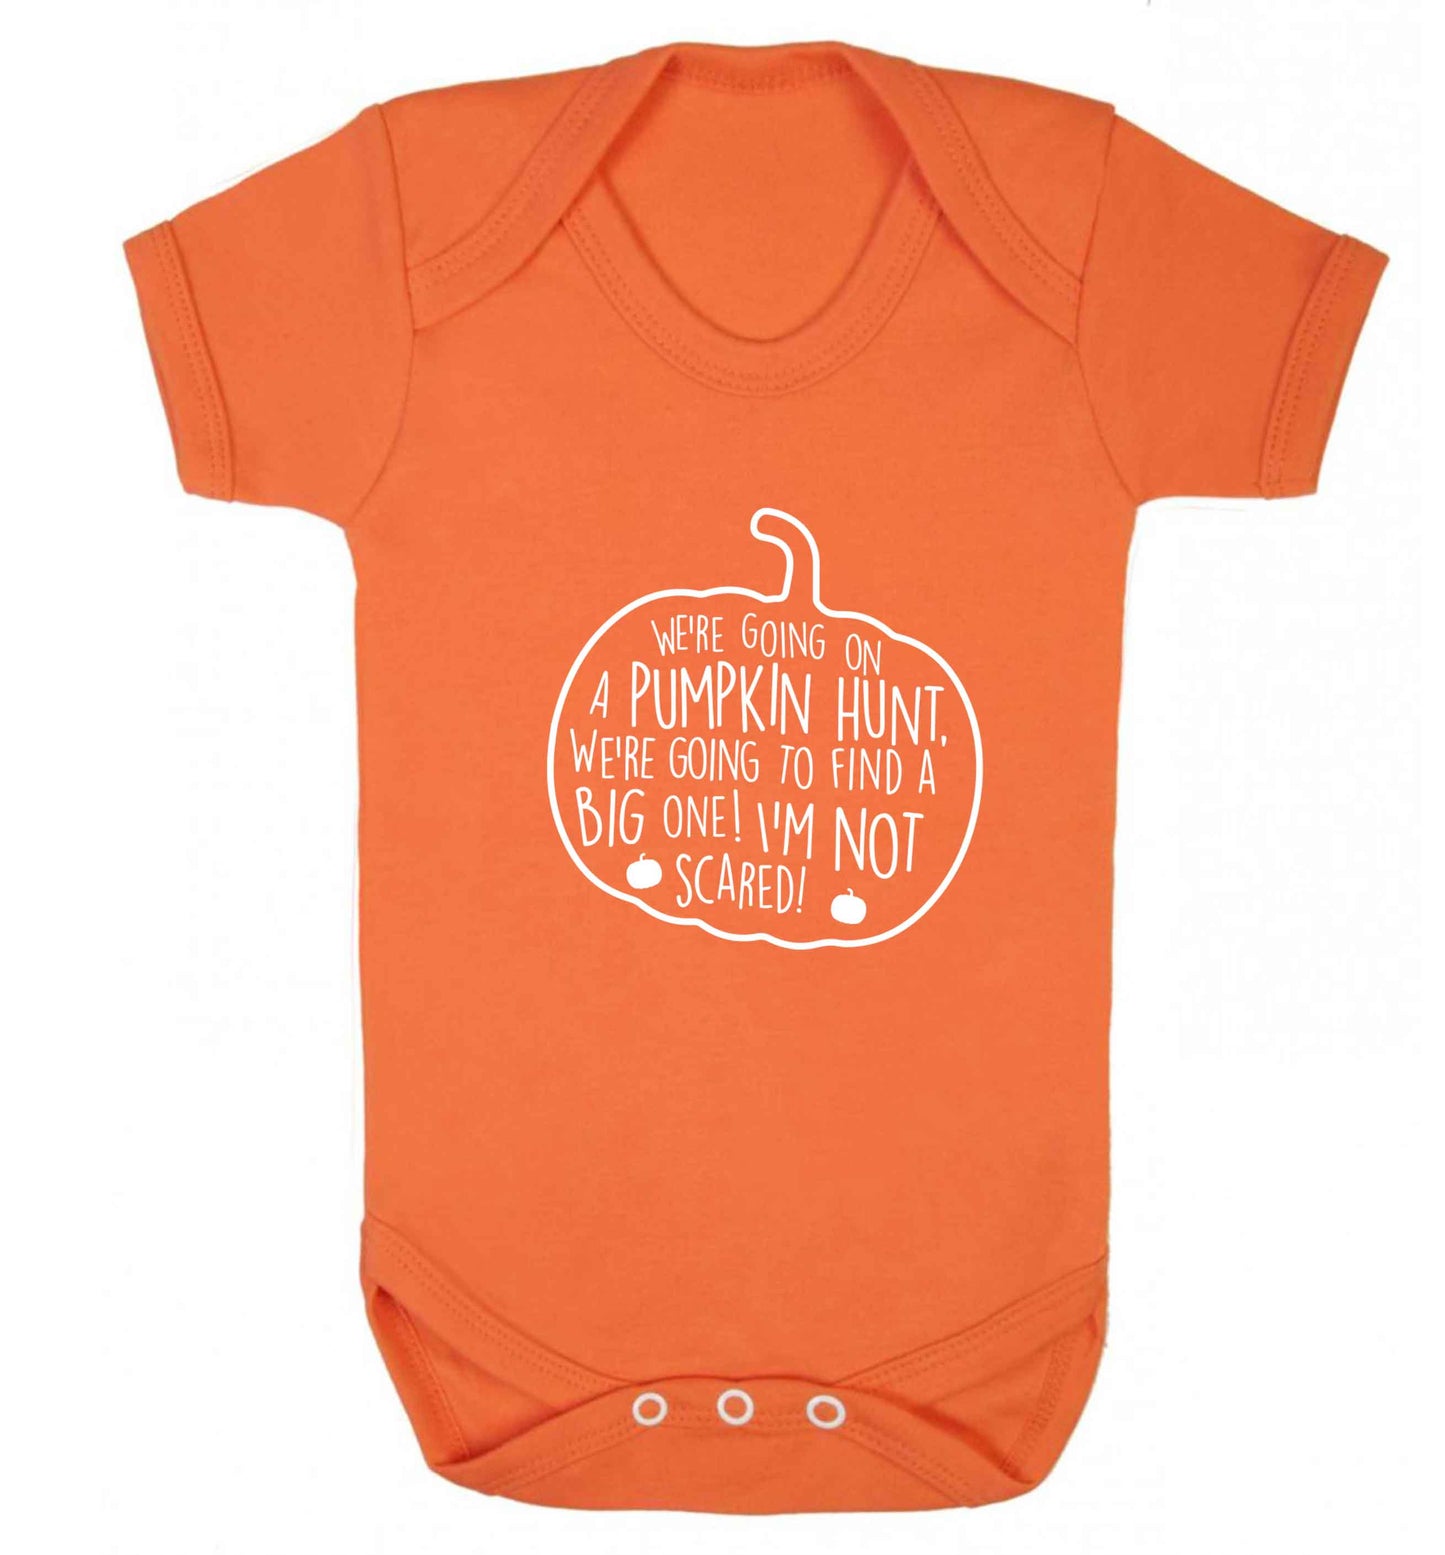 We're going on a pumpkin hunt baby vest orange 18-24 months